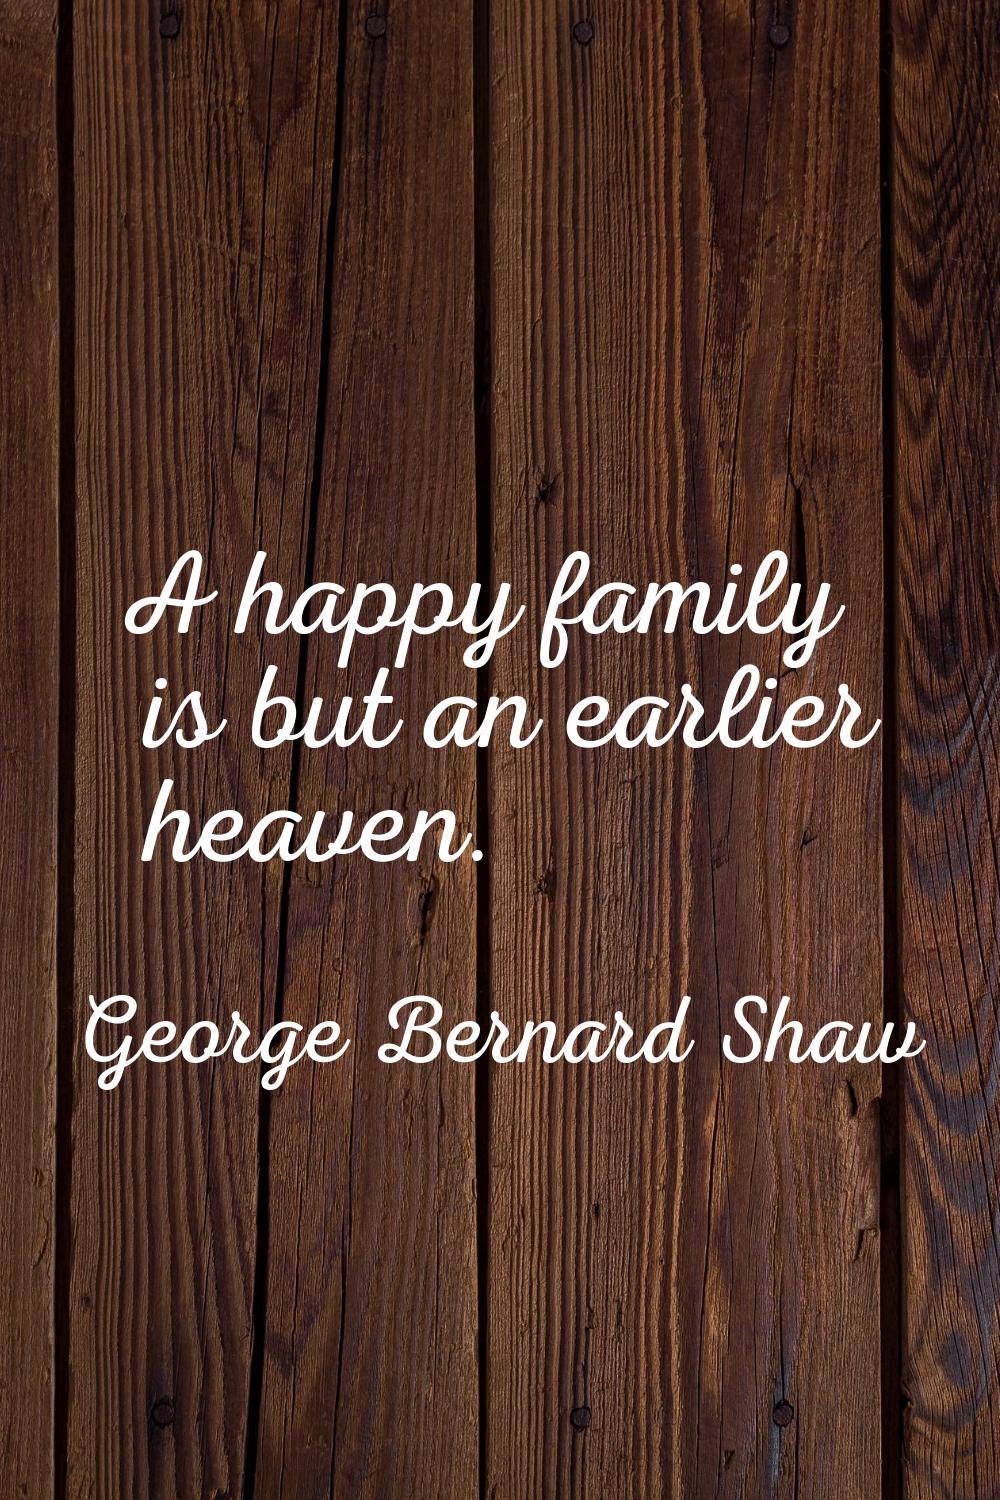 A happy family is but an earlier heaven.